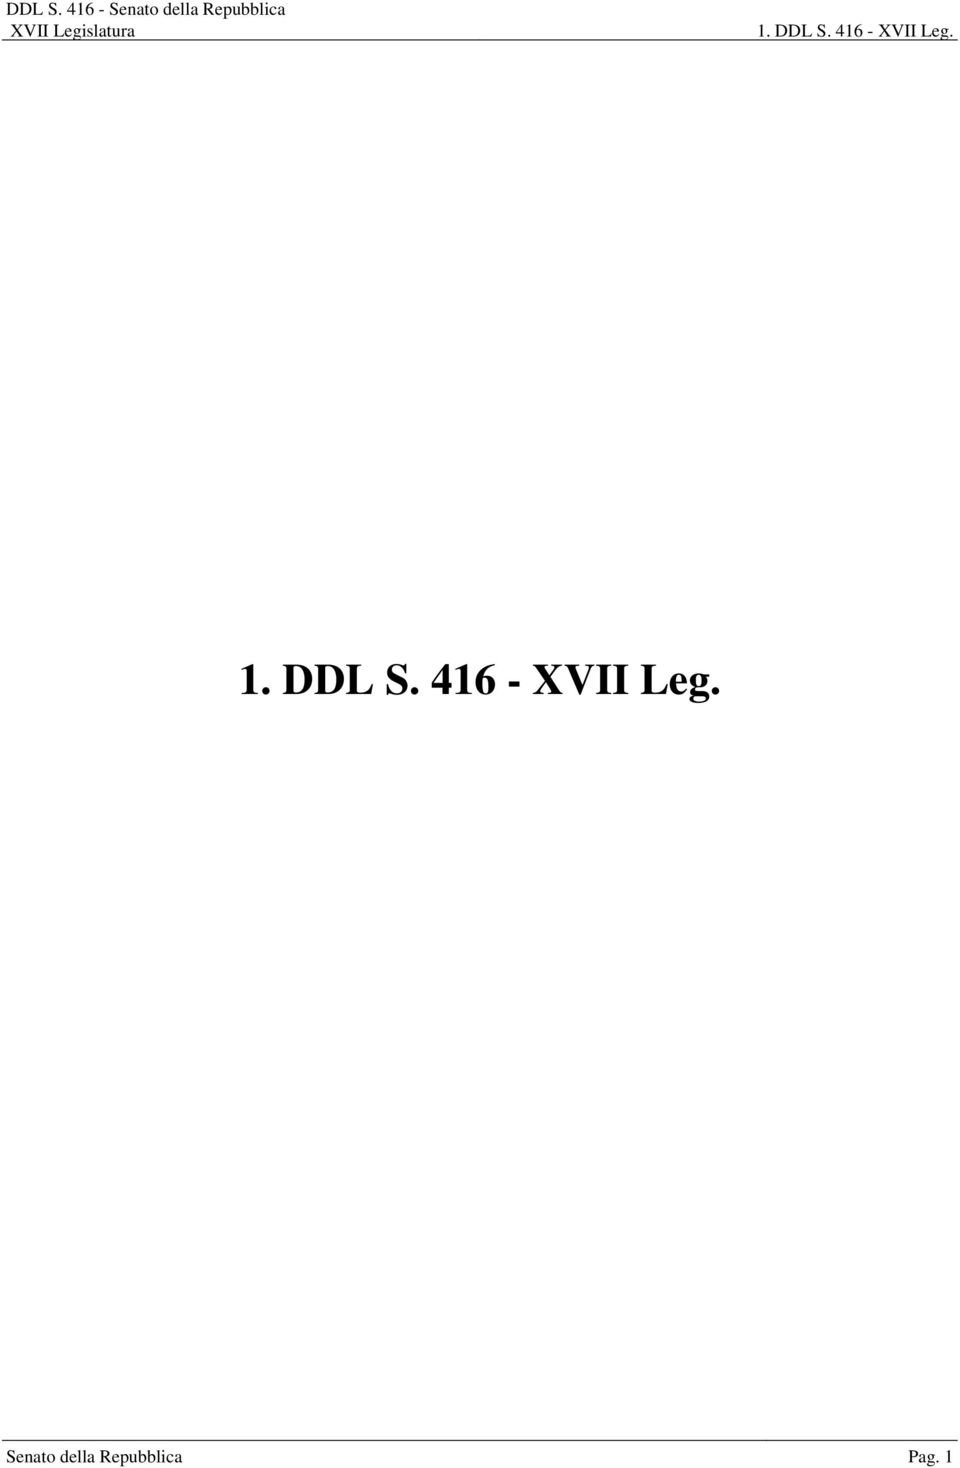 DDL S. 416 - XVII Leg.